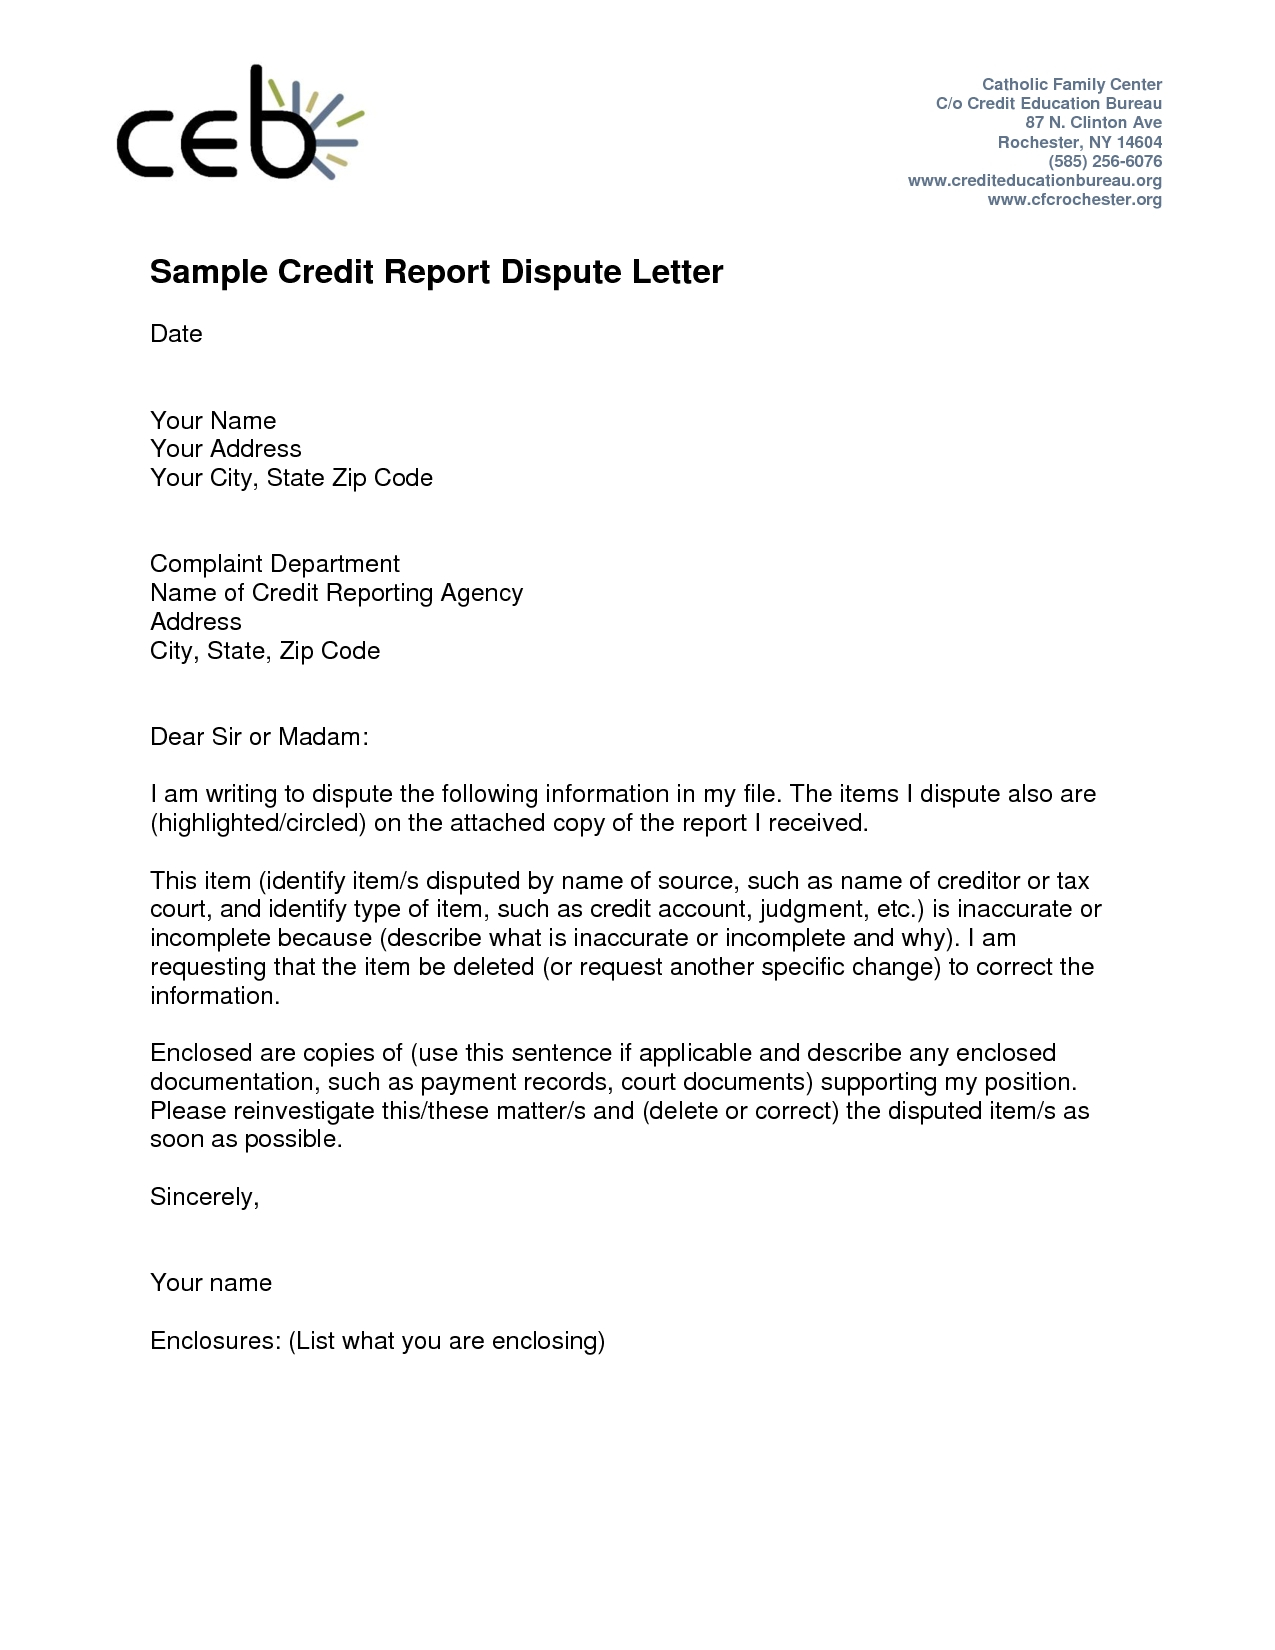 Credit Dispute Letter Template Pdf - Credit Dispute Letter Templates Acurnamedia